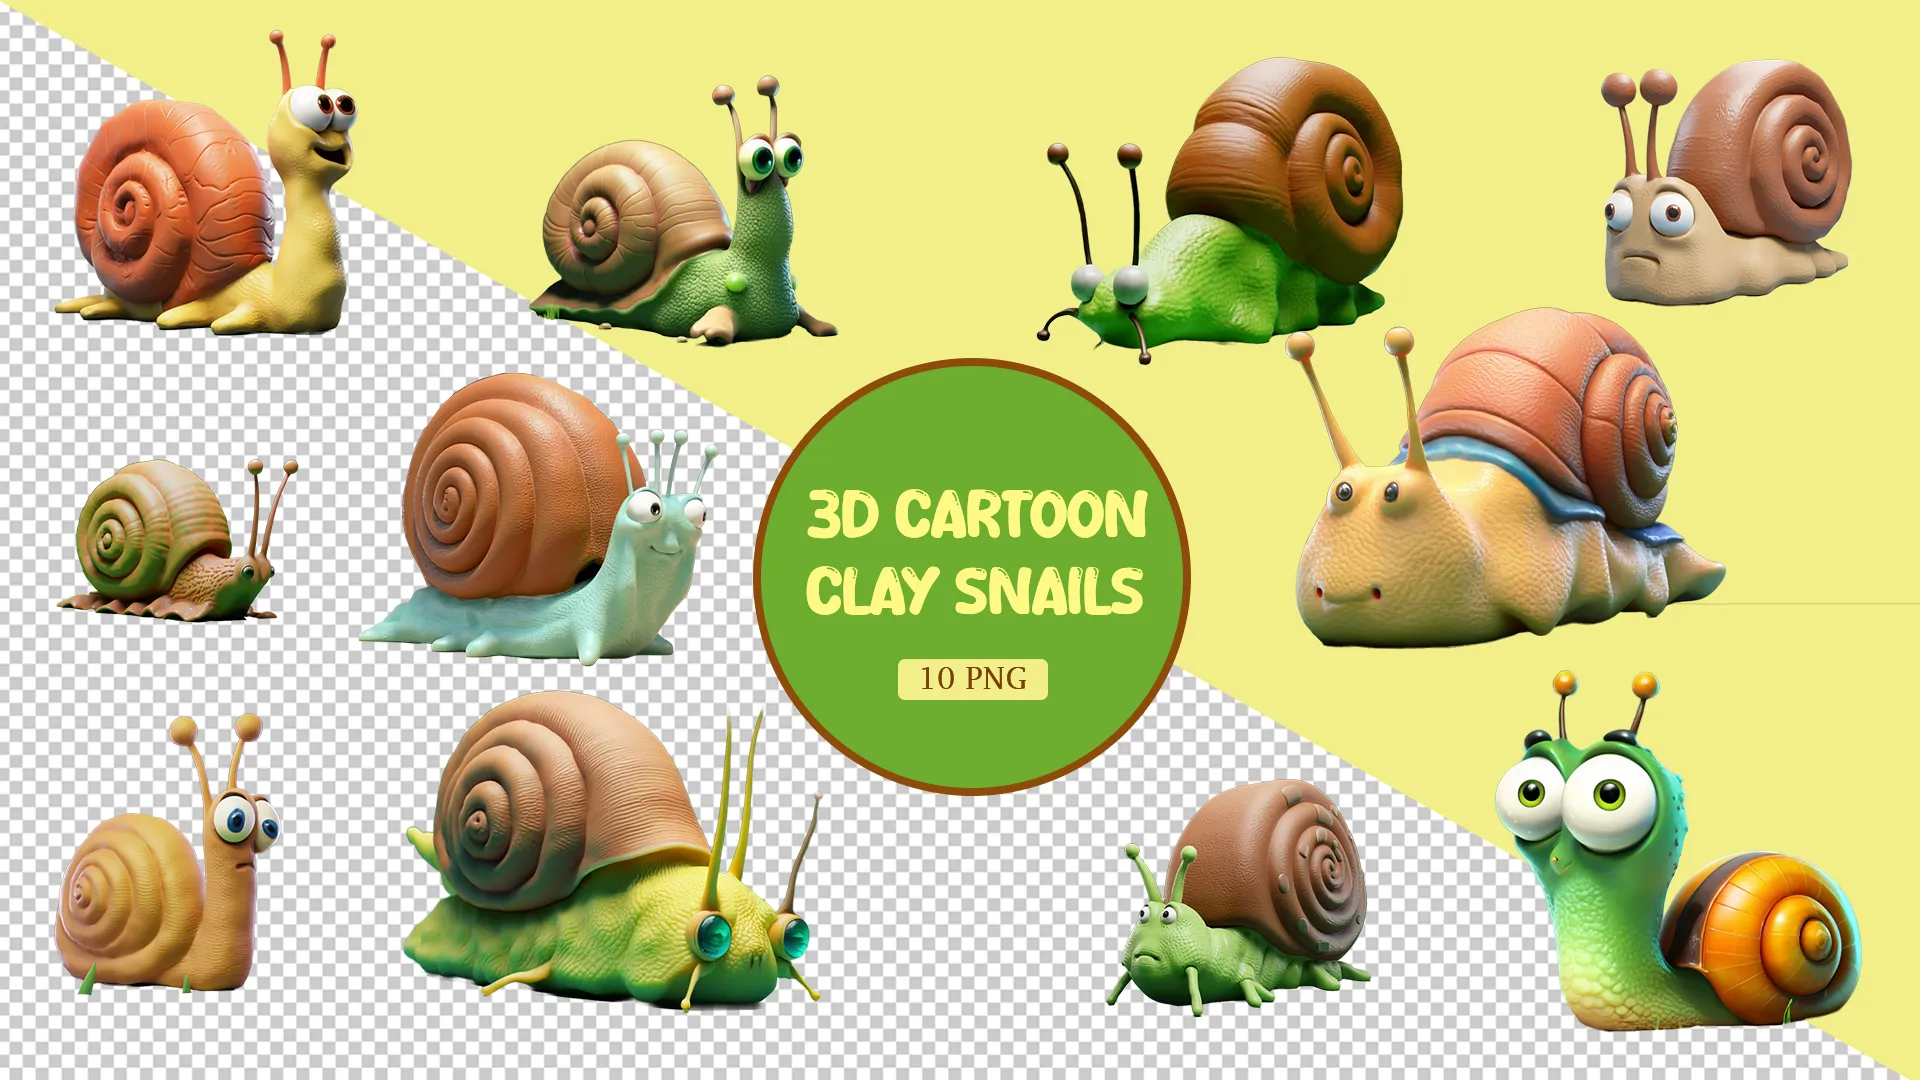 Cute 3D Cartoon Clay Snail Pack image